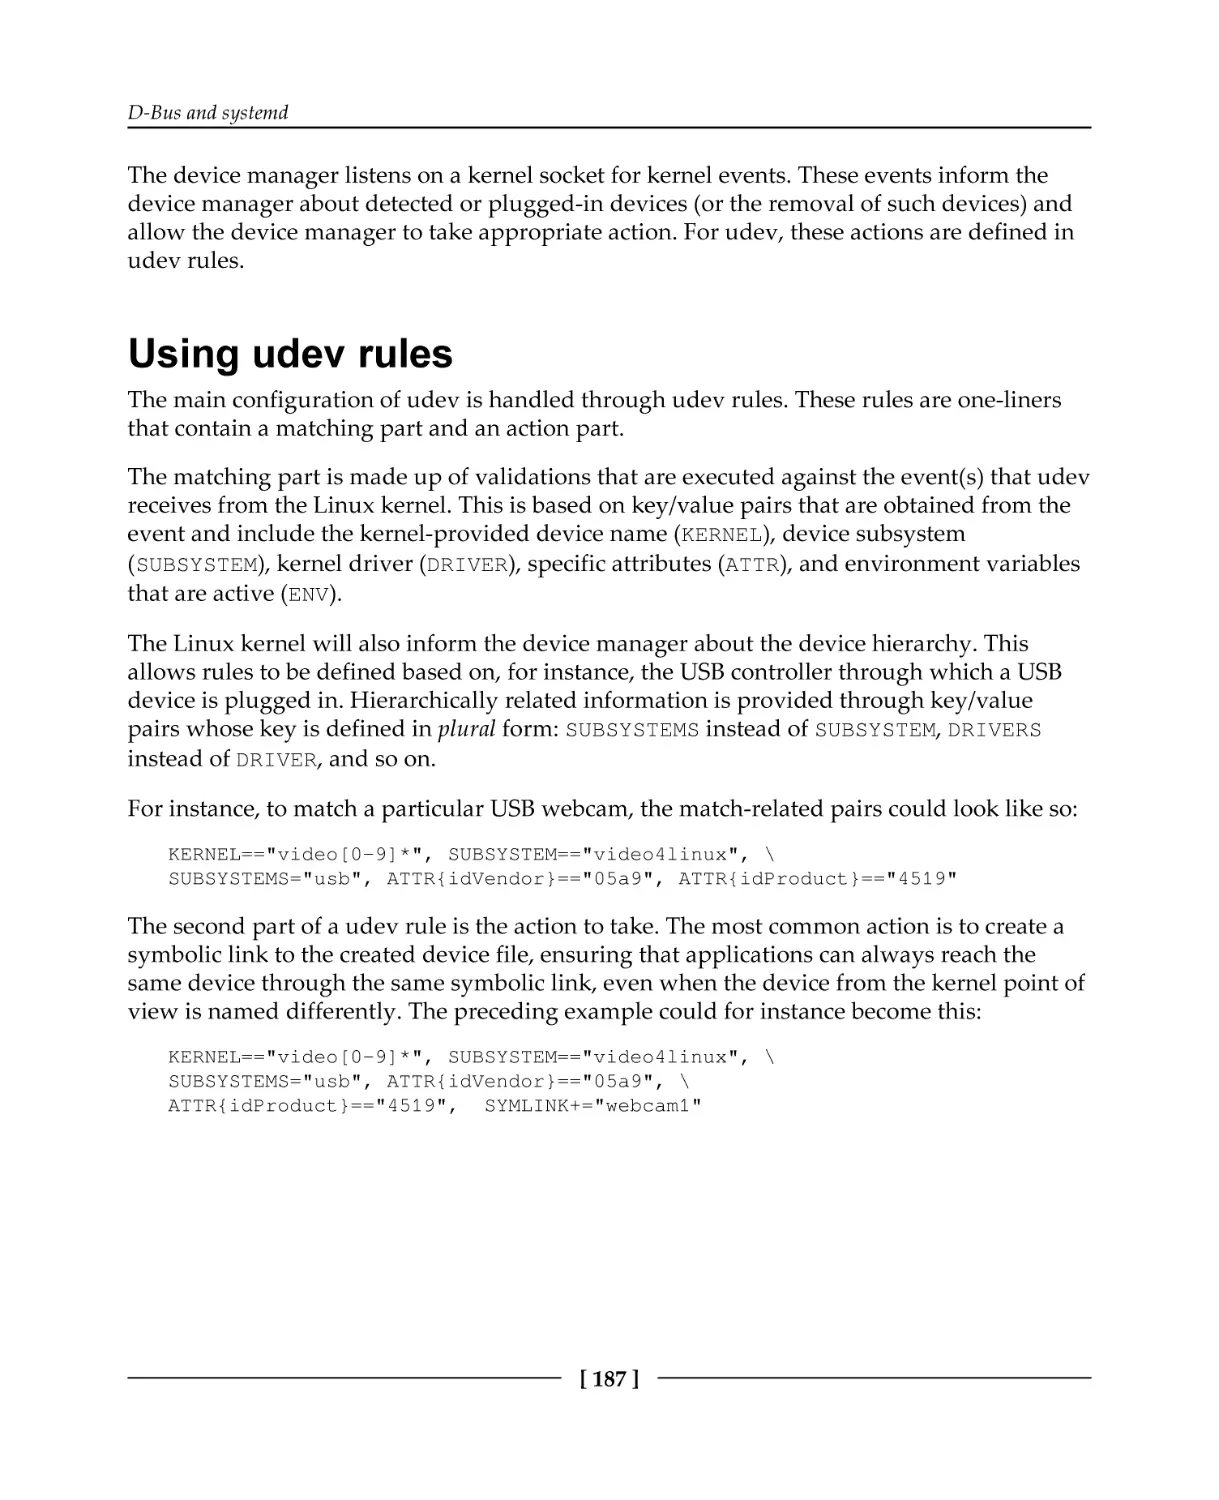 Using udev rules